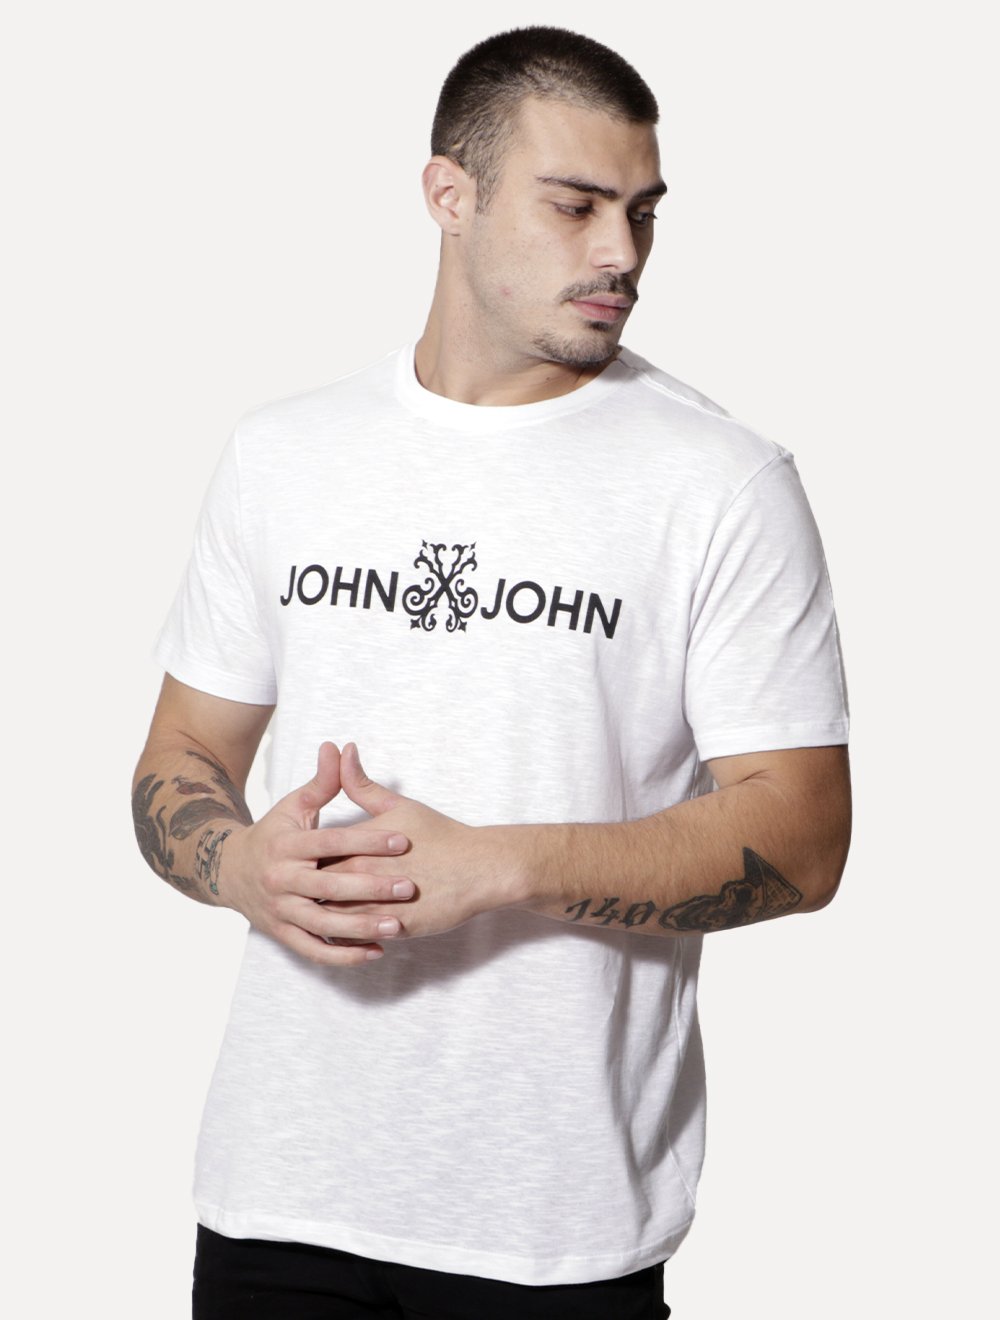 Camiseta John John The Beat Masculina